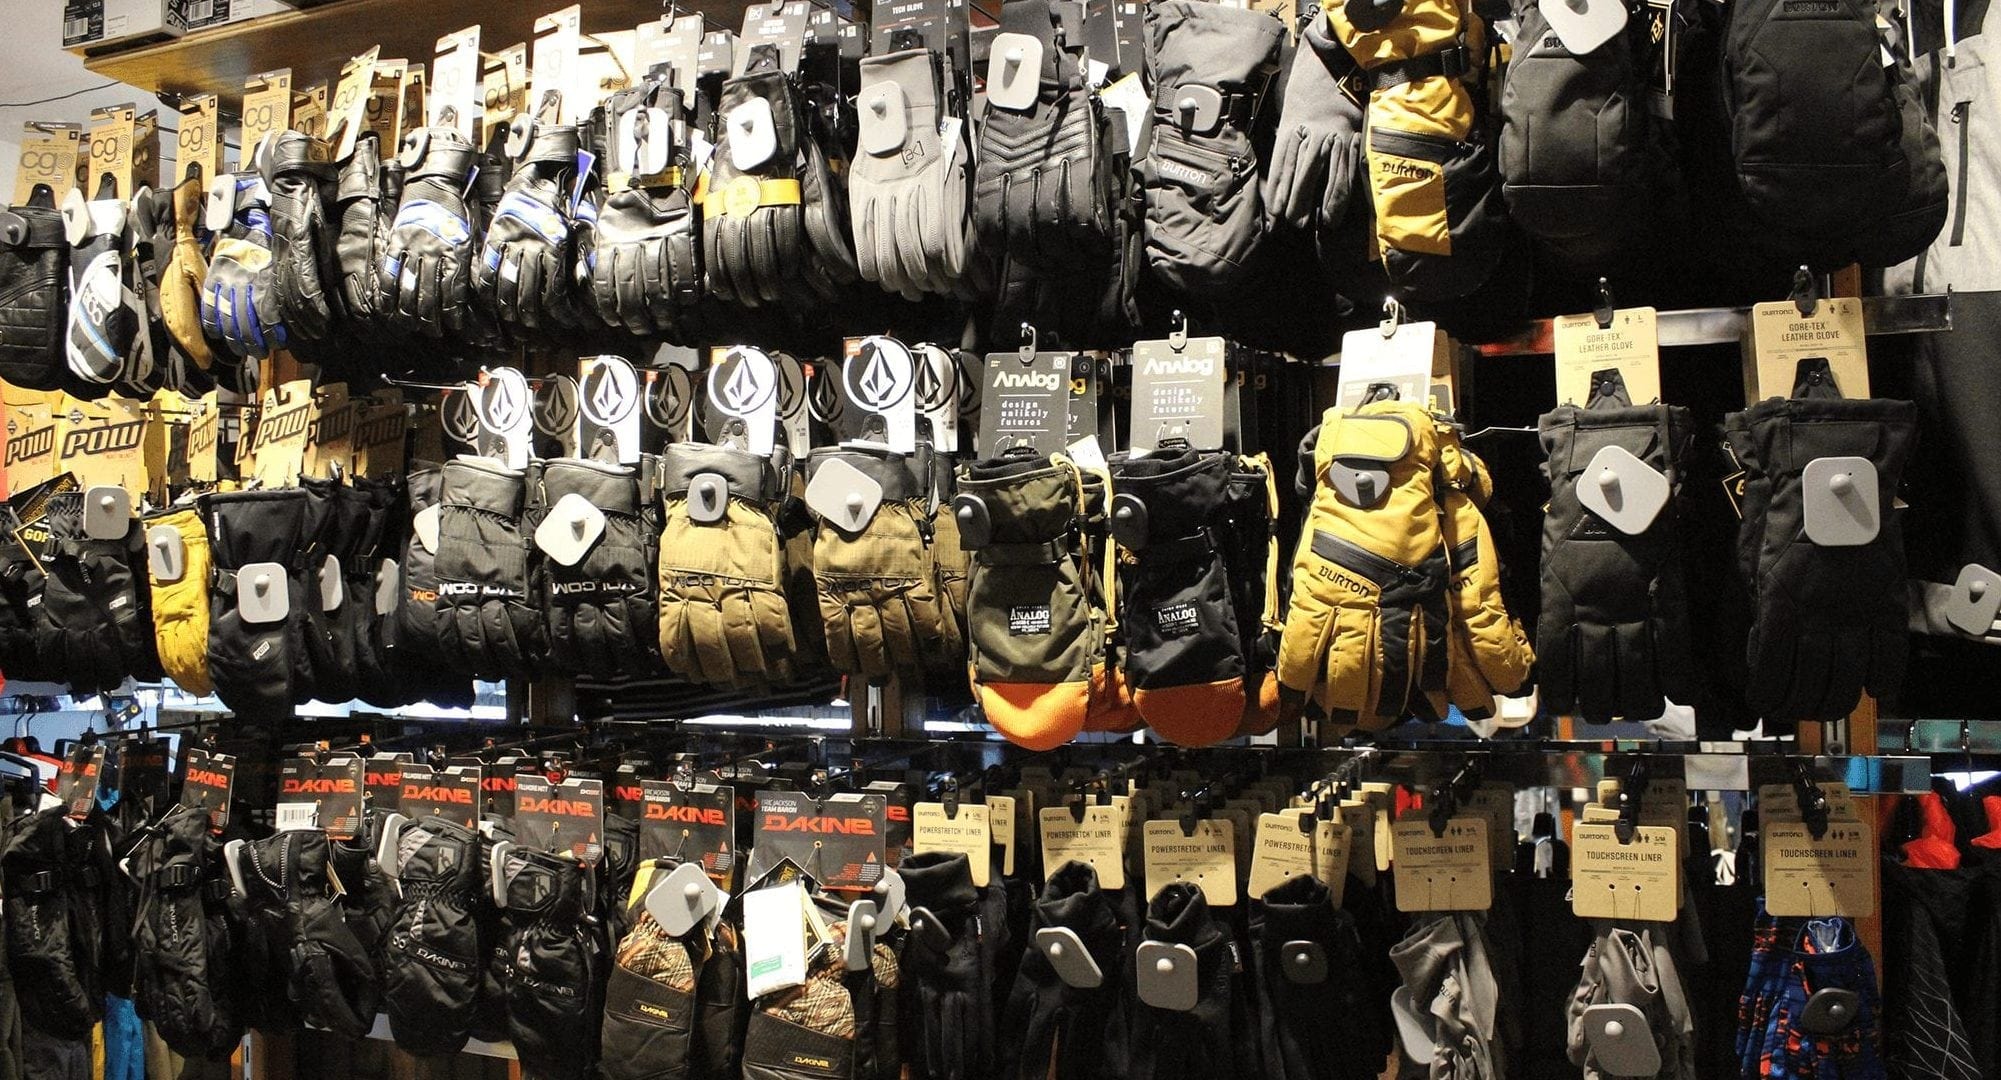 Retail display of winter gloves in Breckenridge